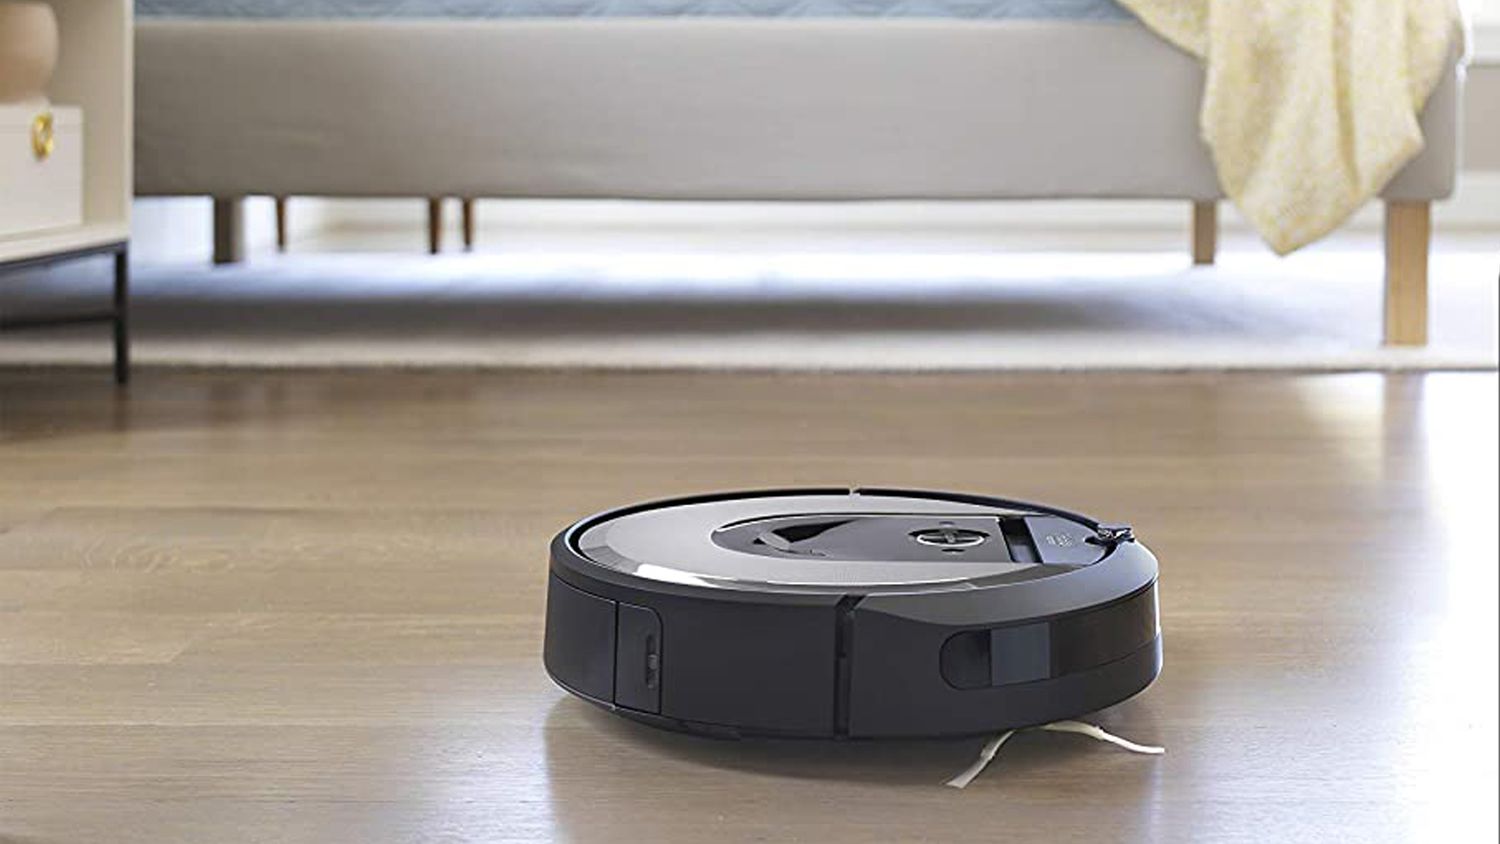 Best Robot Vacuums For Hardwood Floors, Best Roomba For Laminate Floors